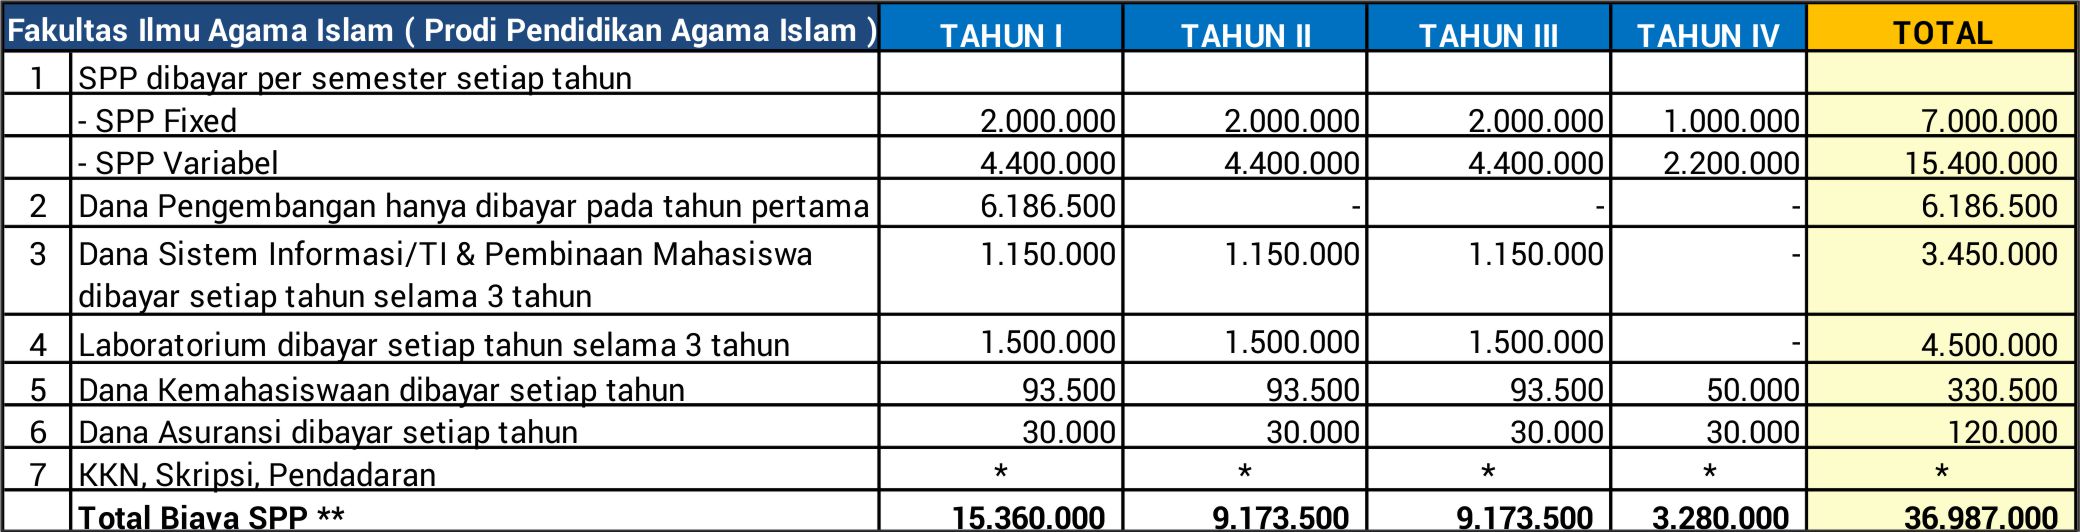 Sarjana Pendidikan Agama Islam | Universitas Islam Indonesia